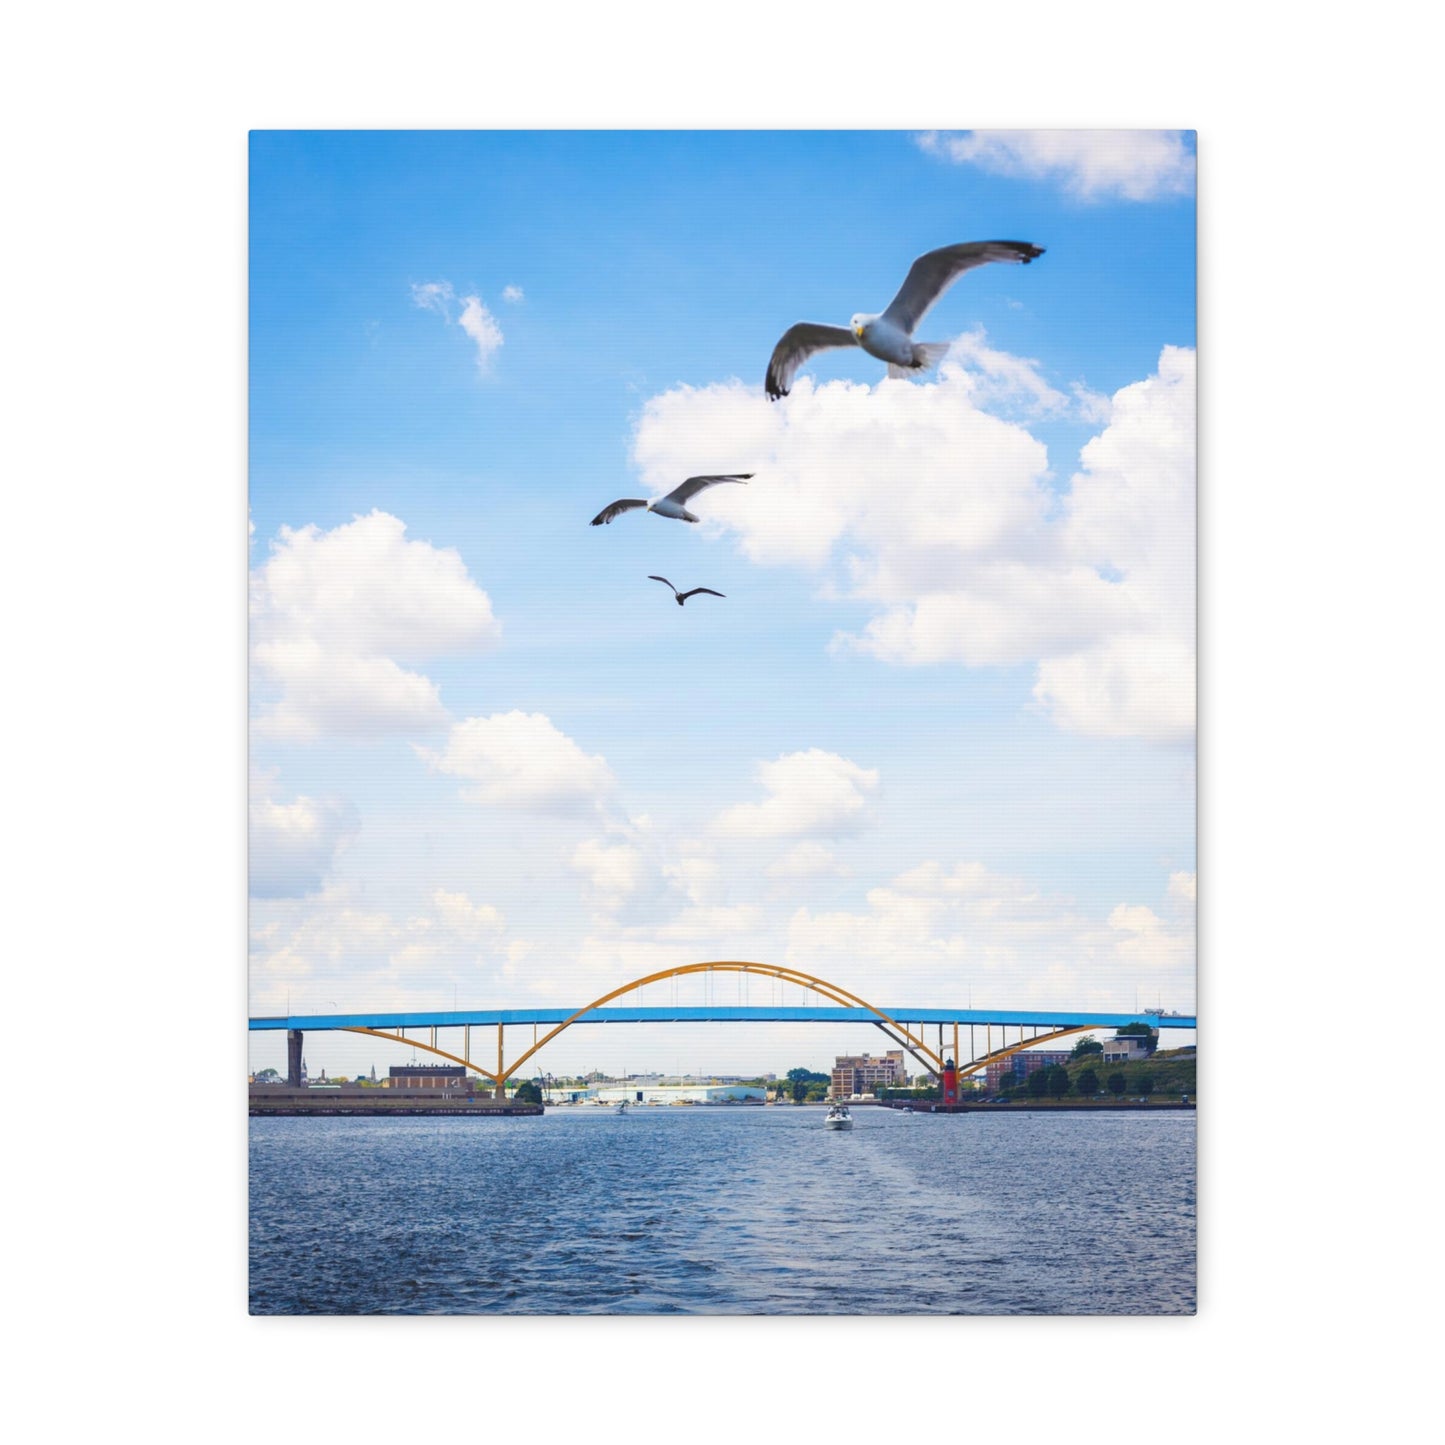 Milwaukee Wisconsin’s Hoan Bridge with 3 Seagulls, Photography Canvas Wrap Wall Art